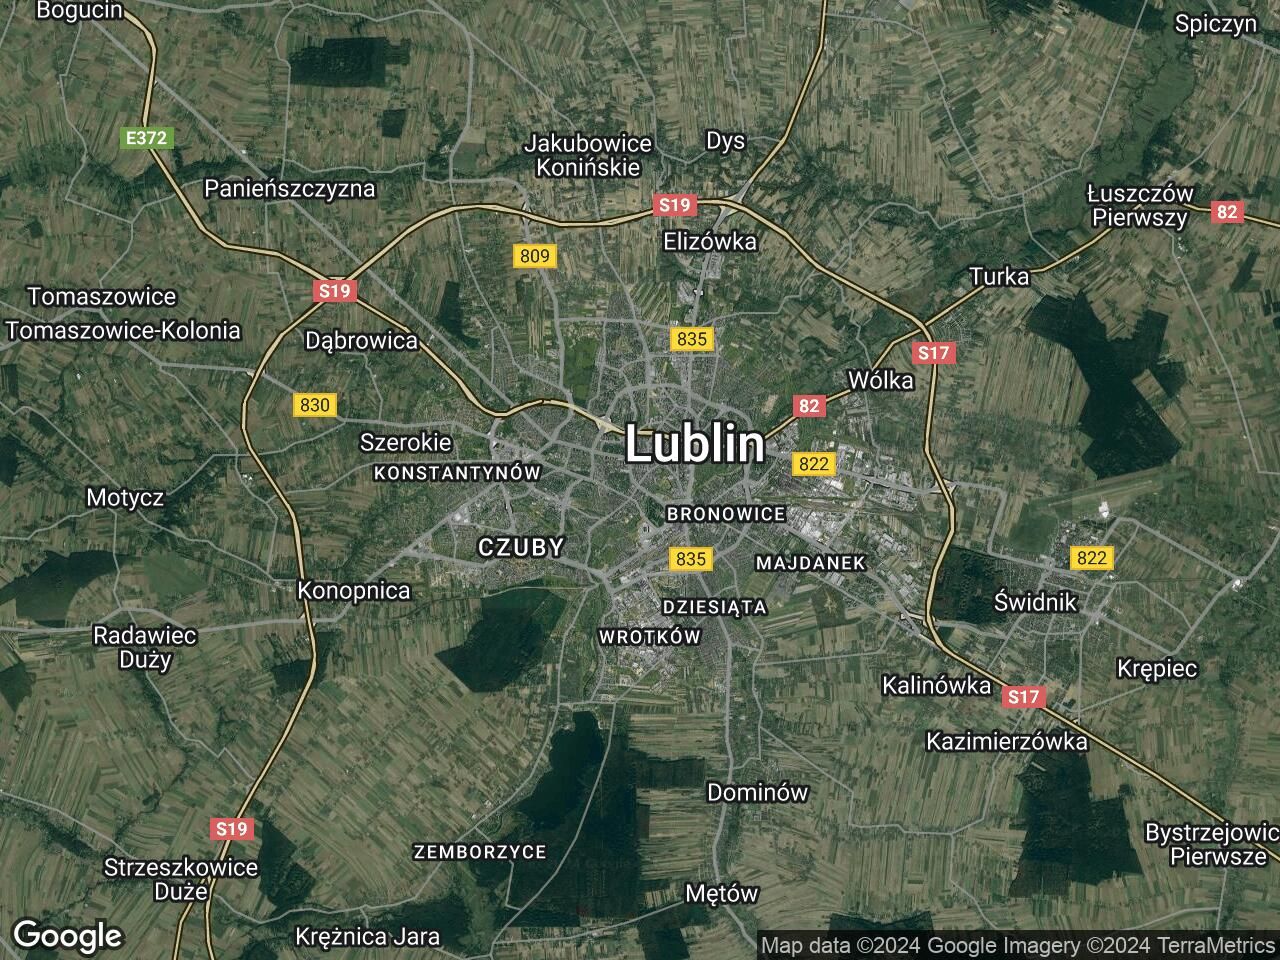 Lokal Lublin Śródmieście